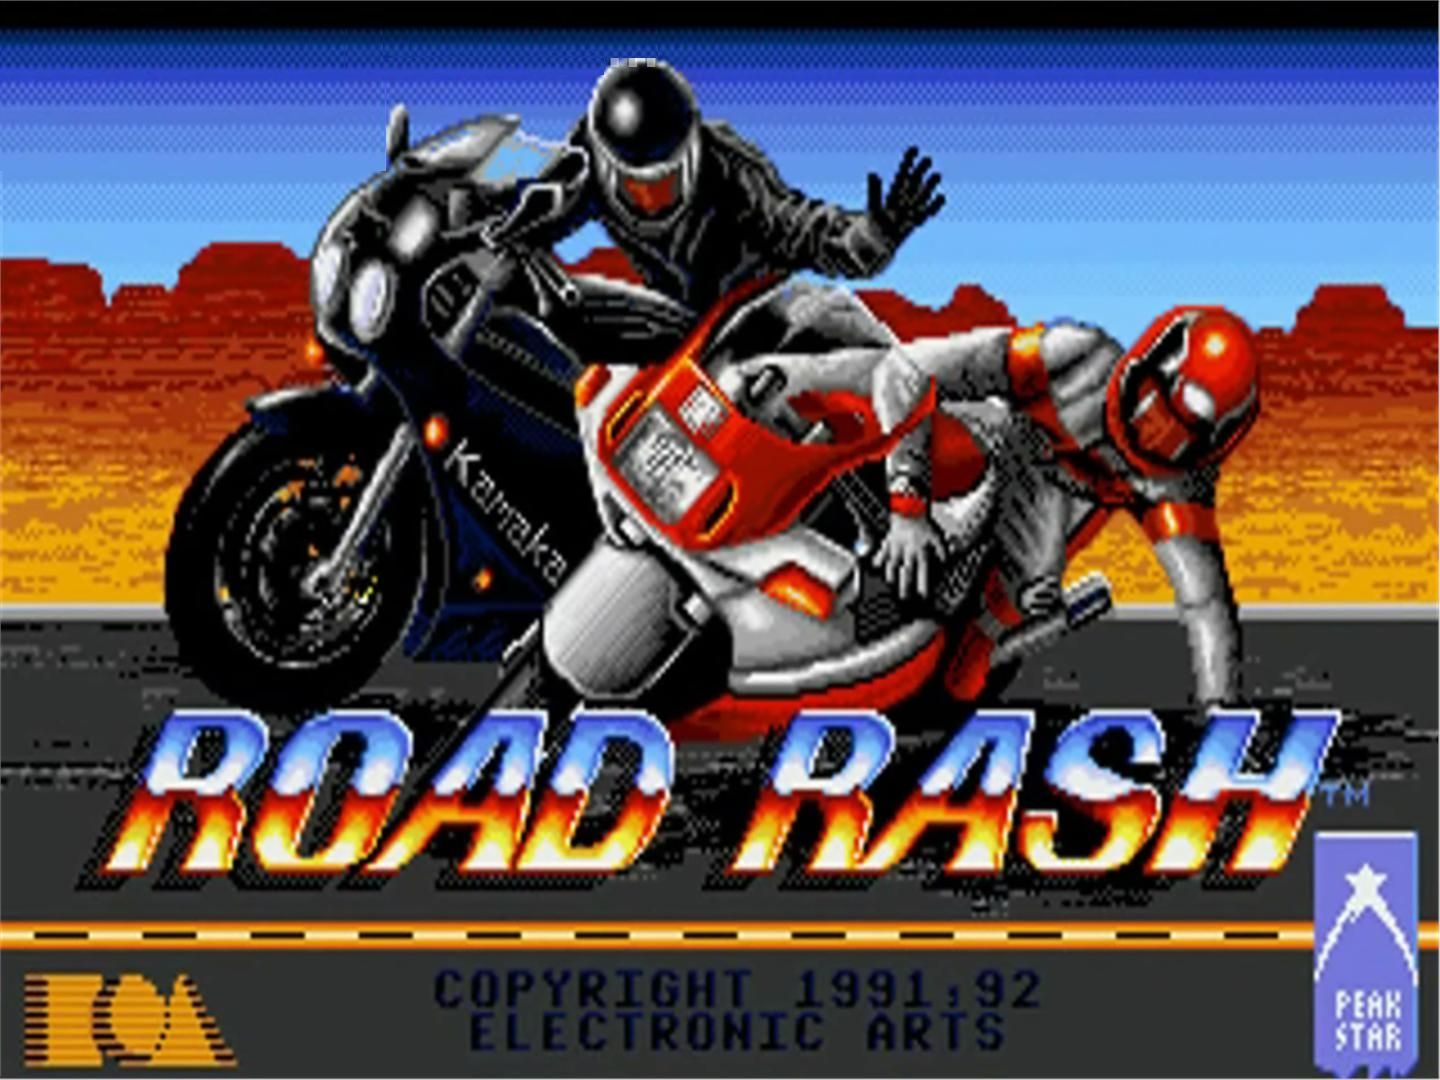 Road Rash Full Game PC for Free